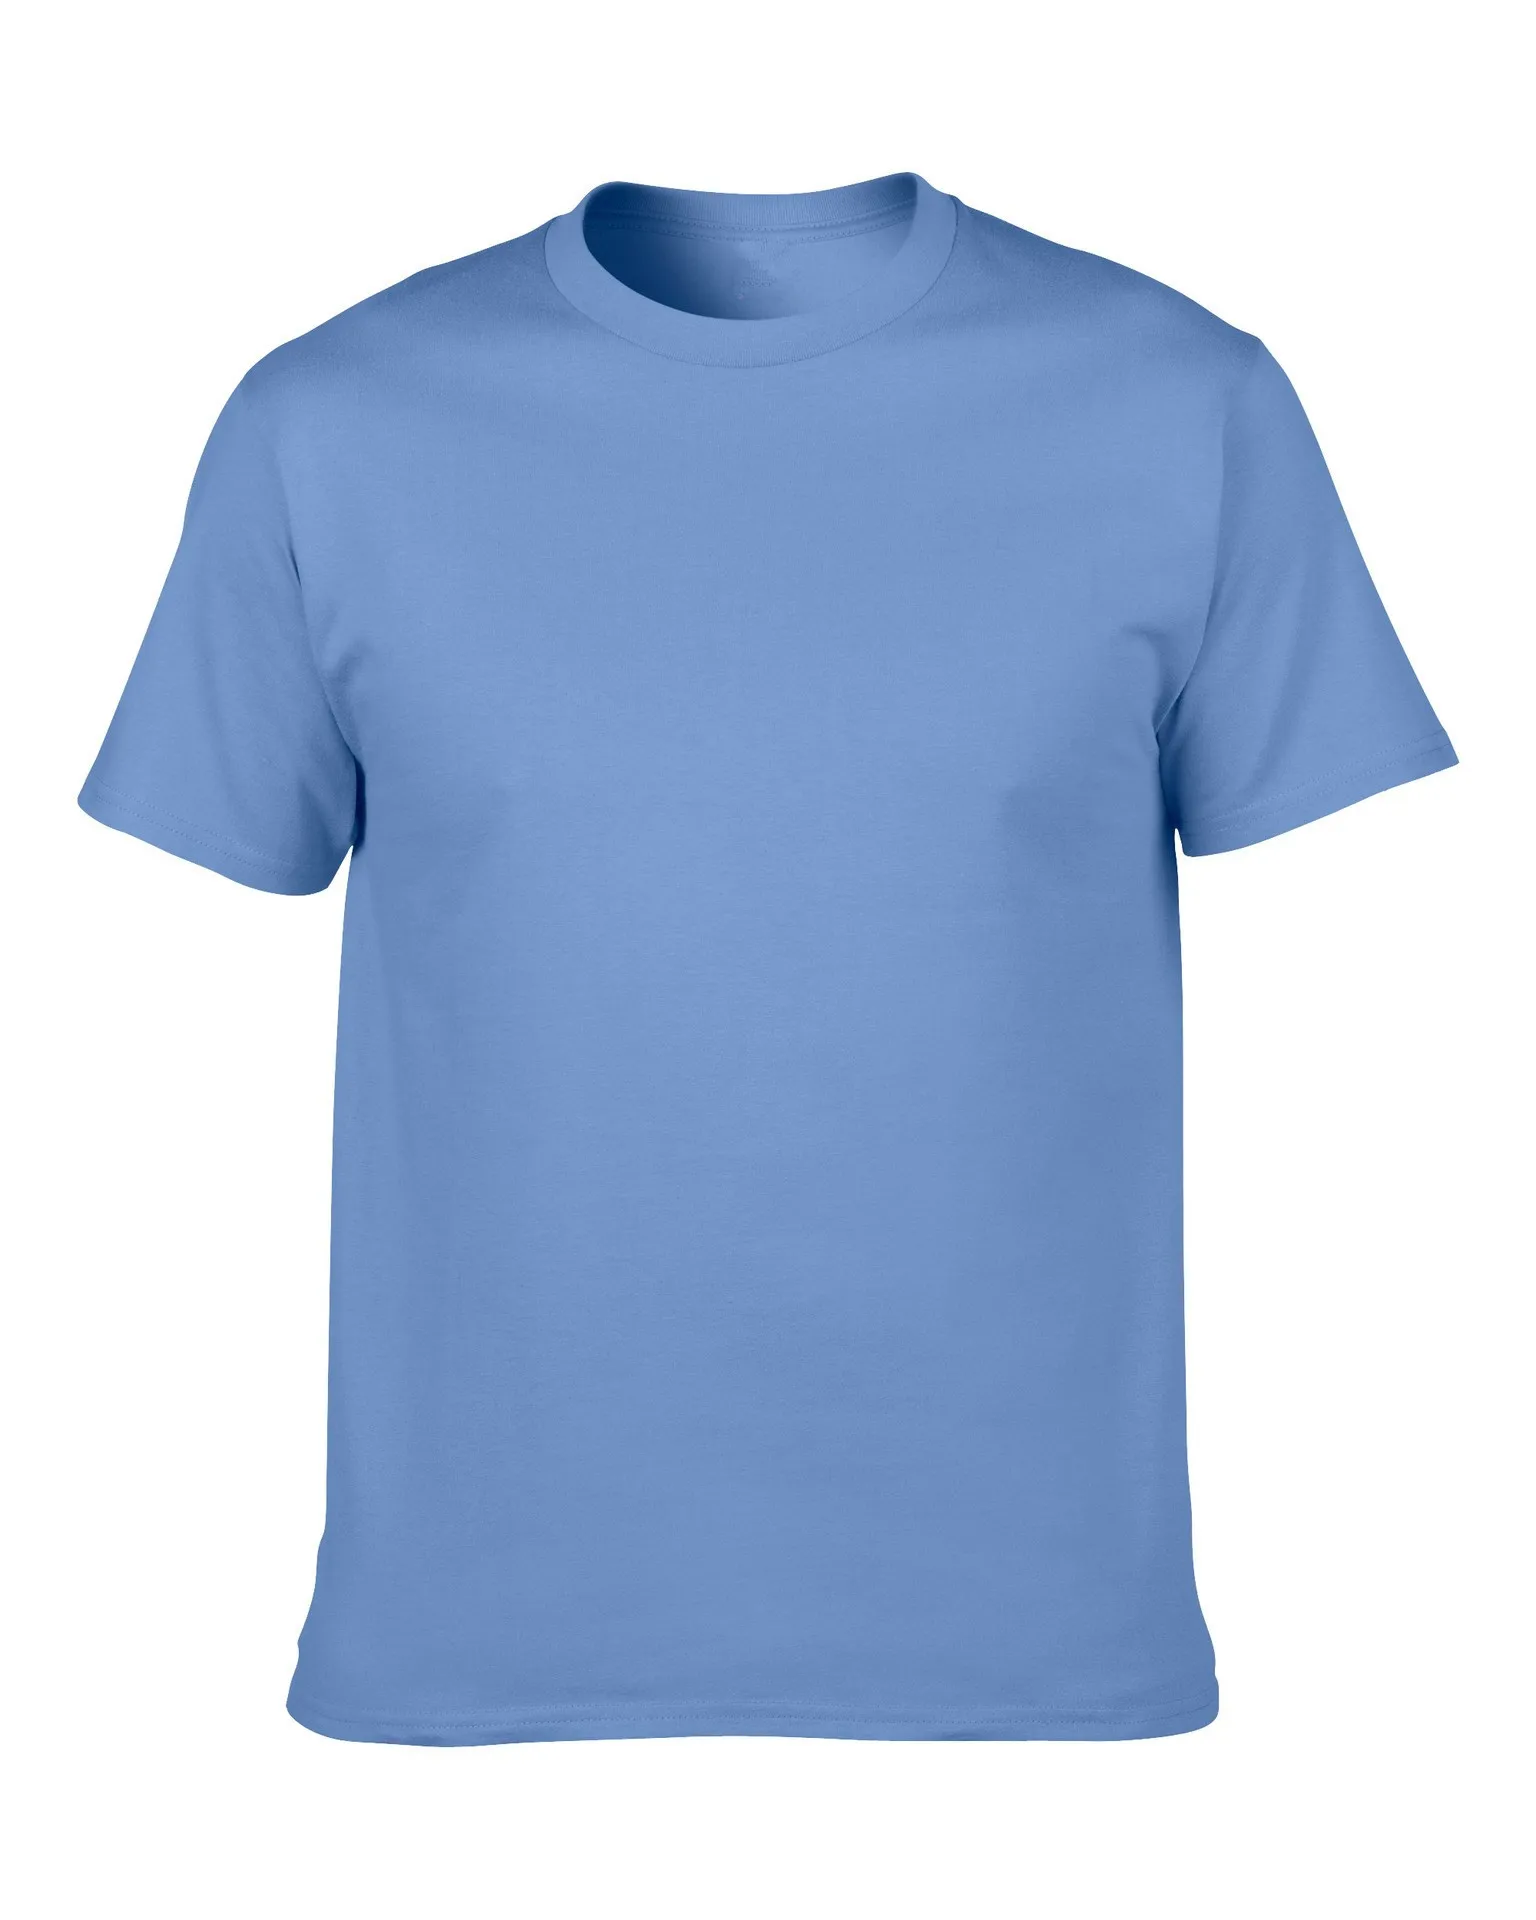 Source colour 1 dollar t shirts wholesale plain tshirts china blank t shirts on m.alibaba.com